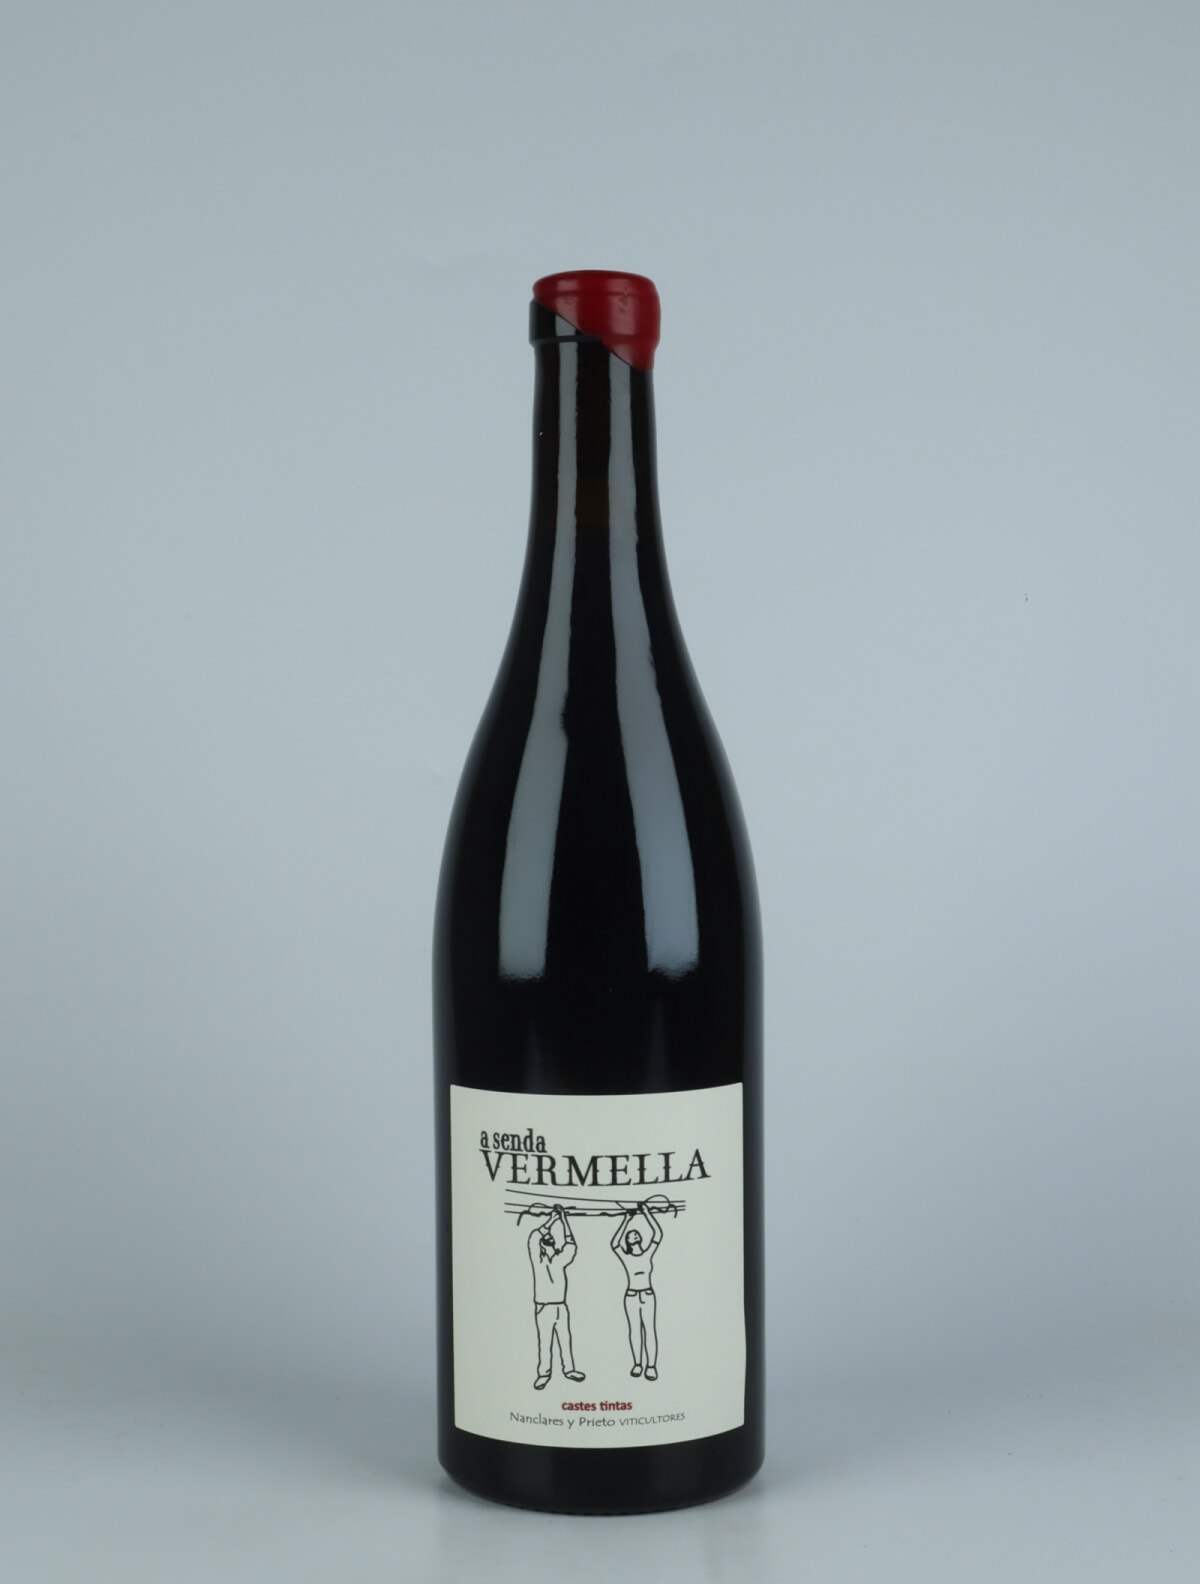 A bottle 2021 A Senda Vermella Red wine from Alberto Nanclares, Rias Baixas in Spain